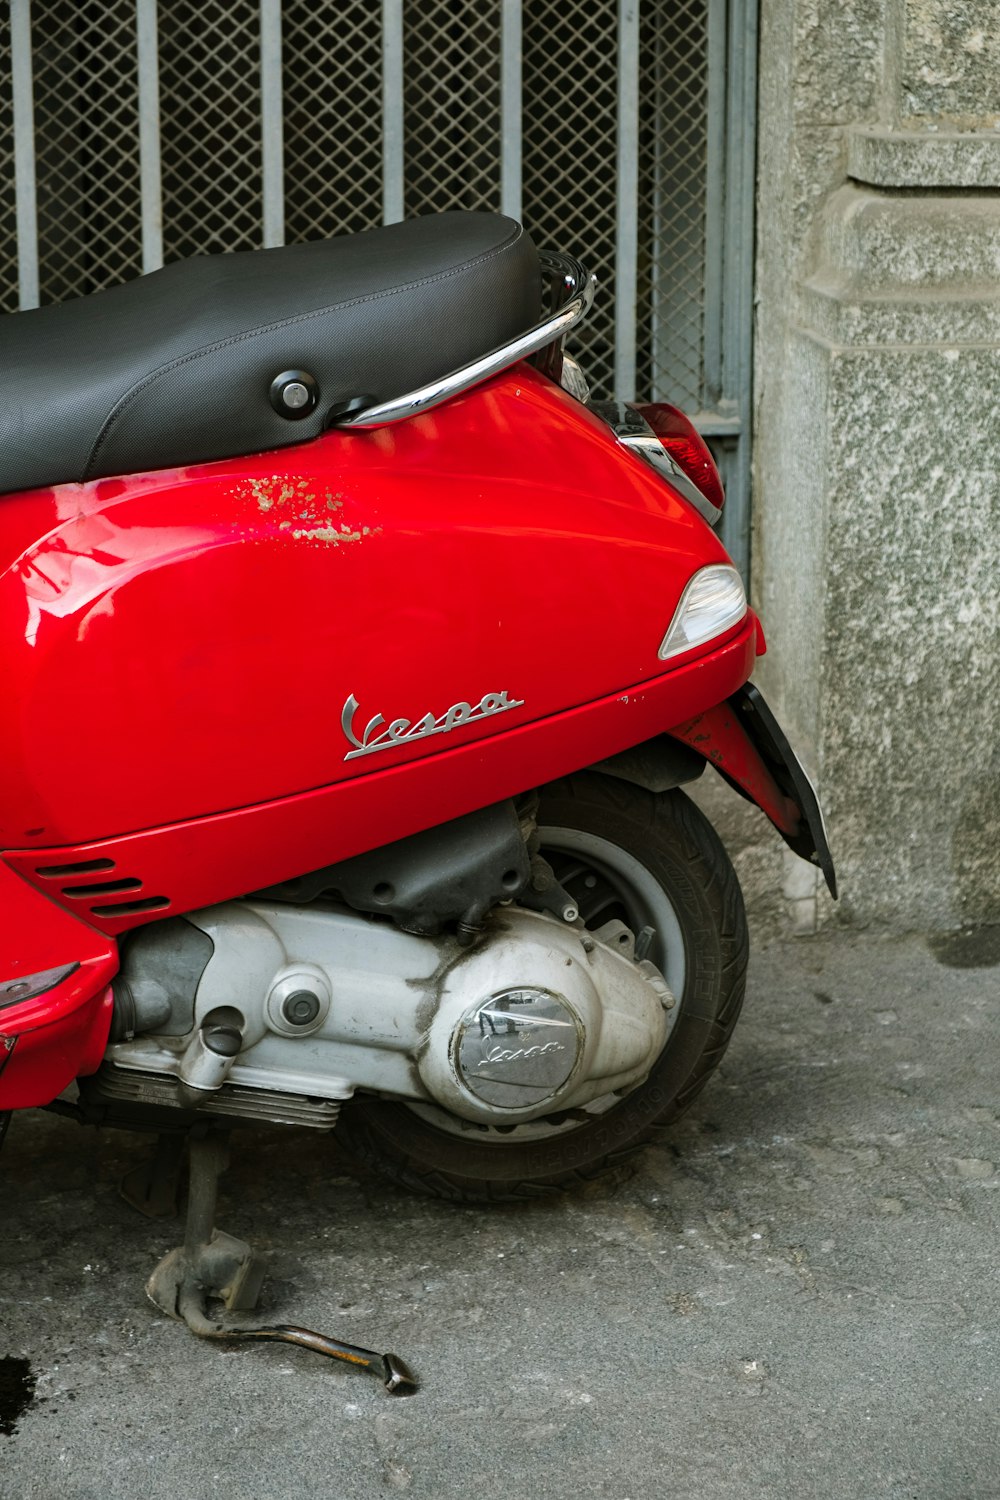 red Vespa motor scooter parked near gate